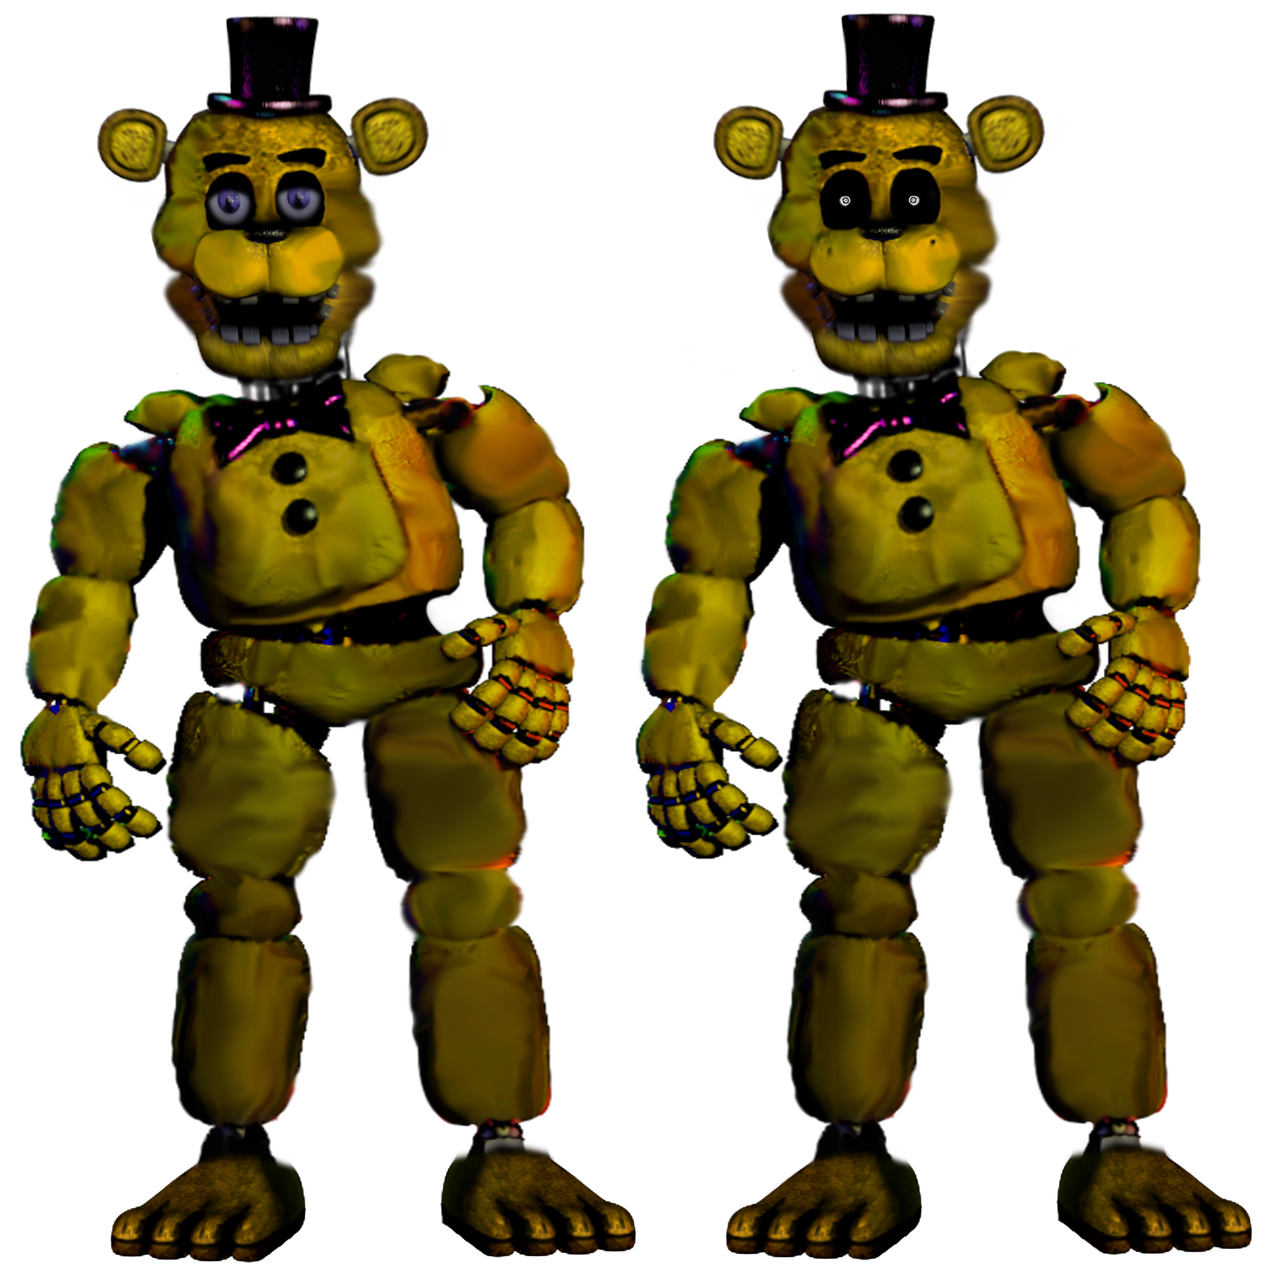 FNAF 2: Toy Fredbear (Golden Freddy) Full Body by Estevamgamer on DeviantArt